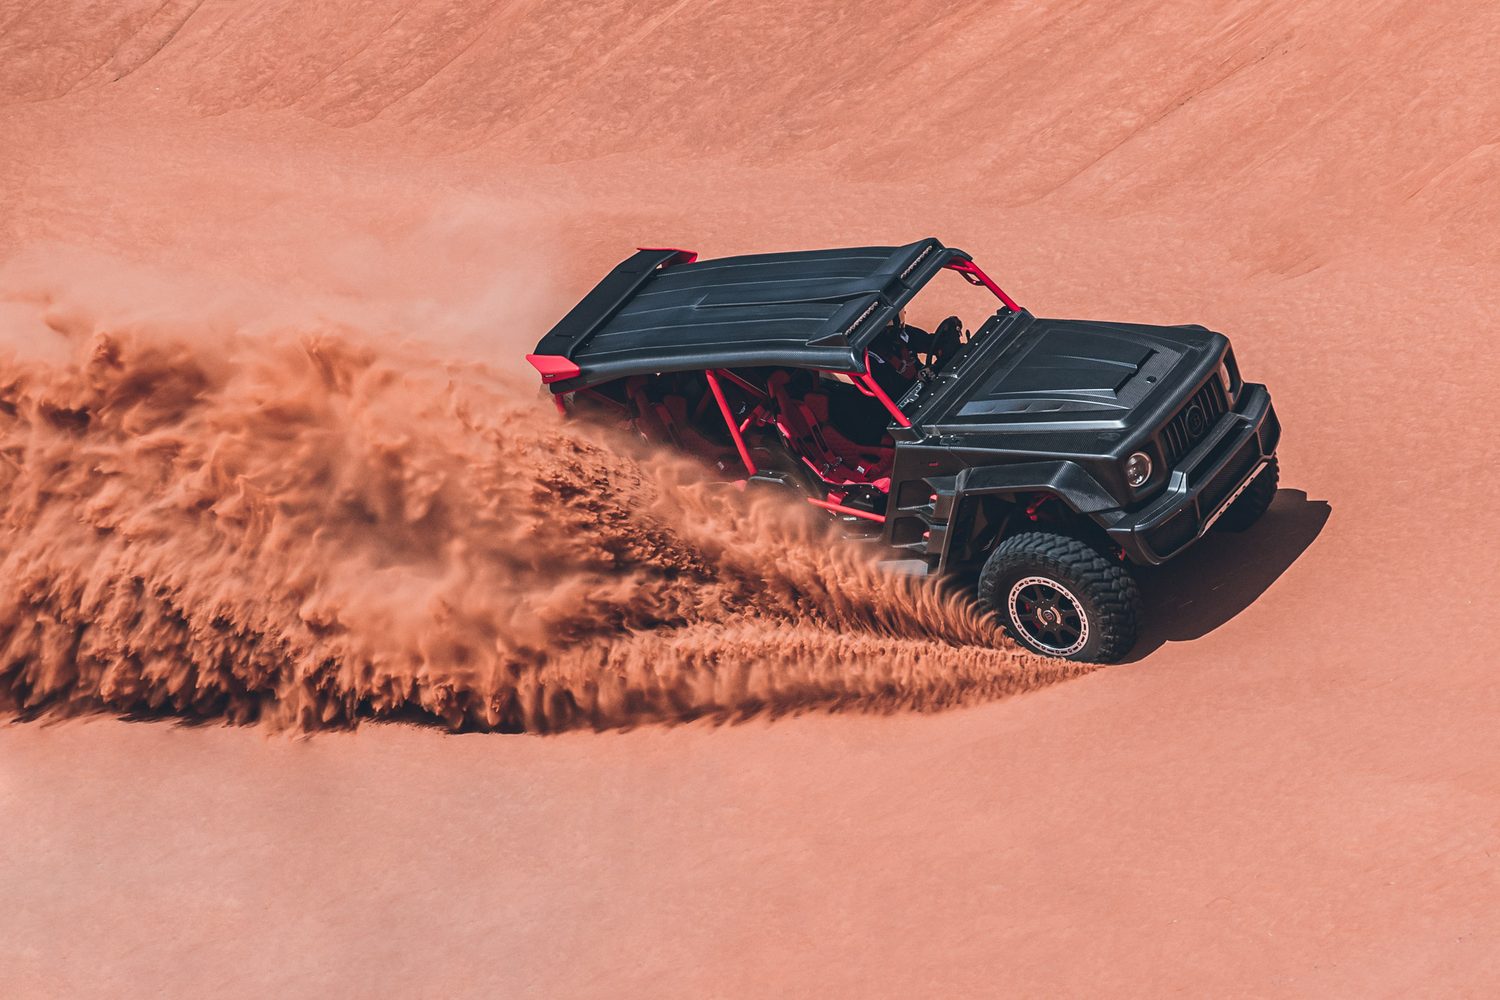 Brabus unveils "ultimate desert dunes racer"